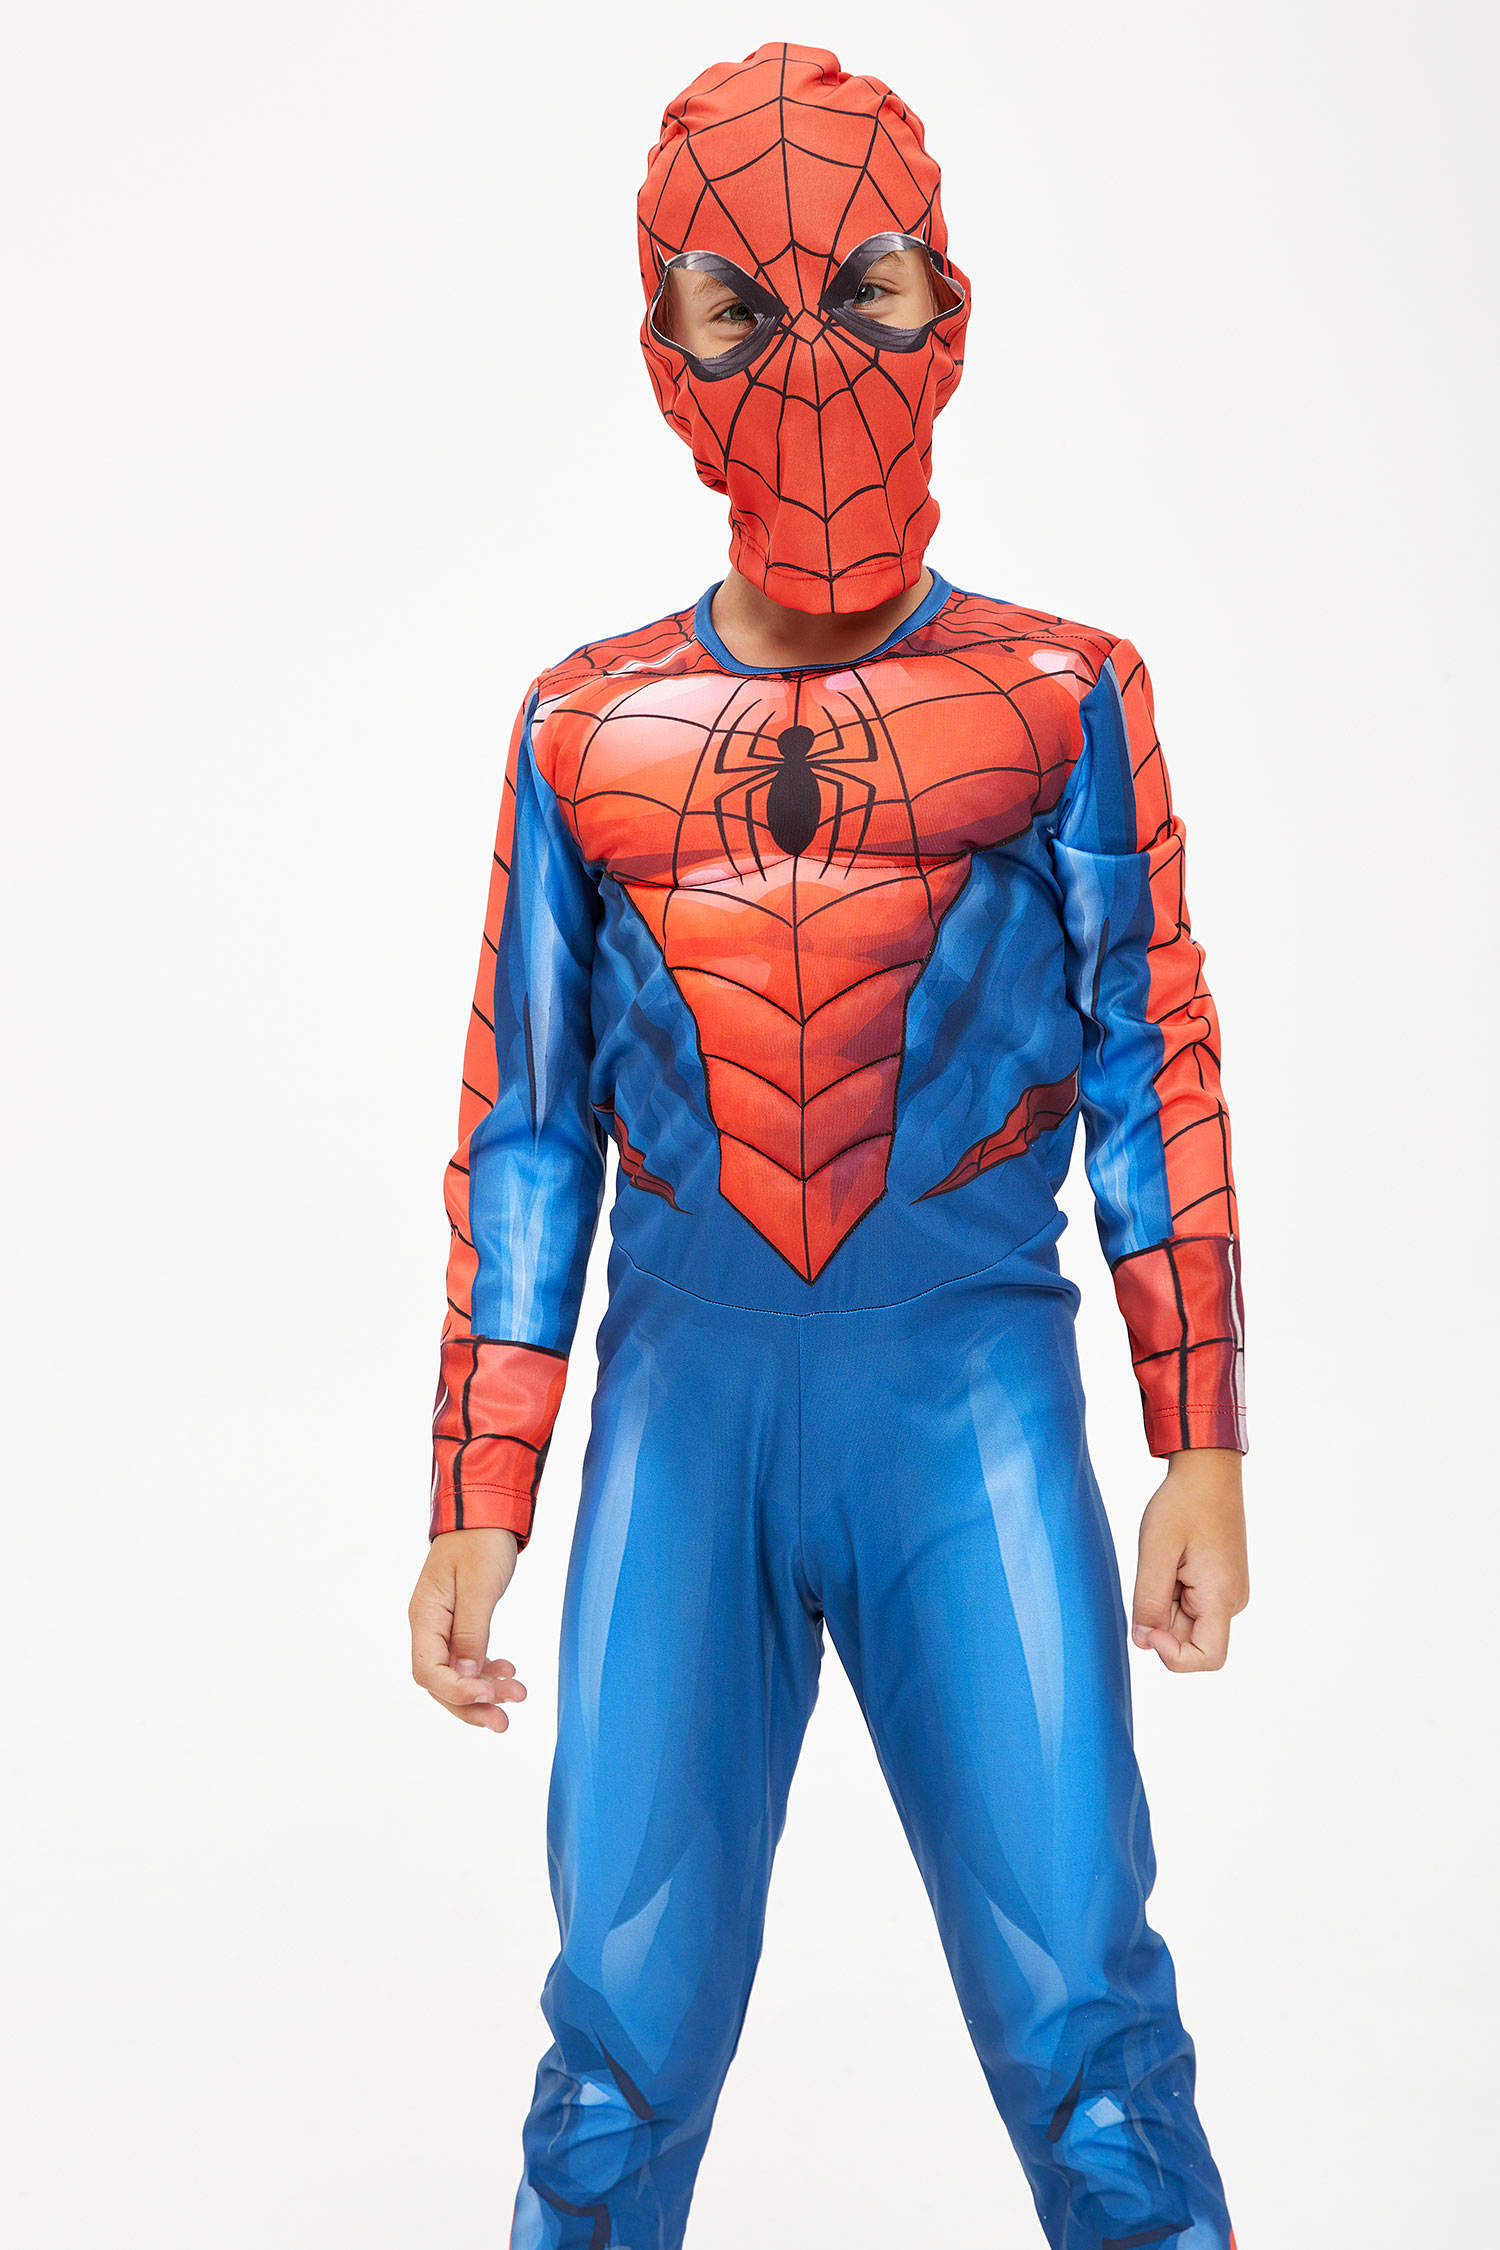 Kirmizi Erkek Cocuk Genc Erkek Erkek Cocuk Spider Man Kostumu 1516284 Defacto